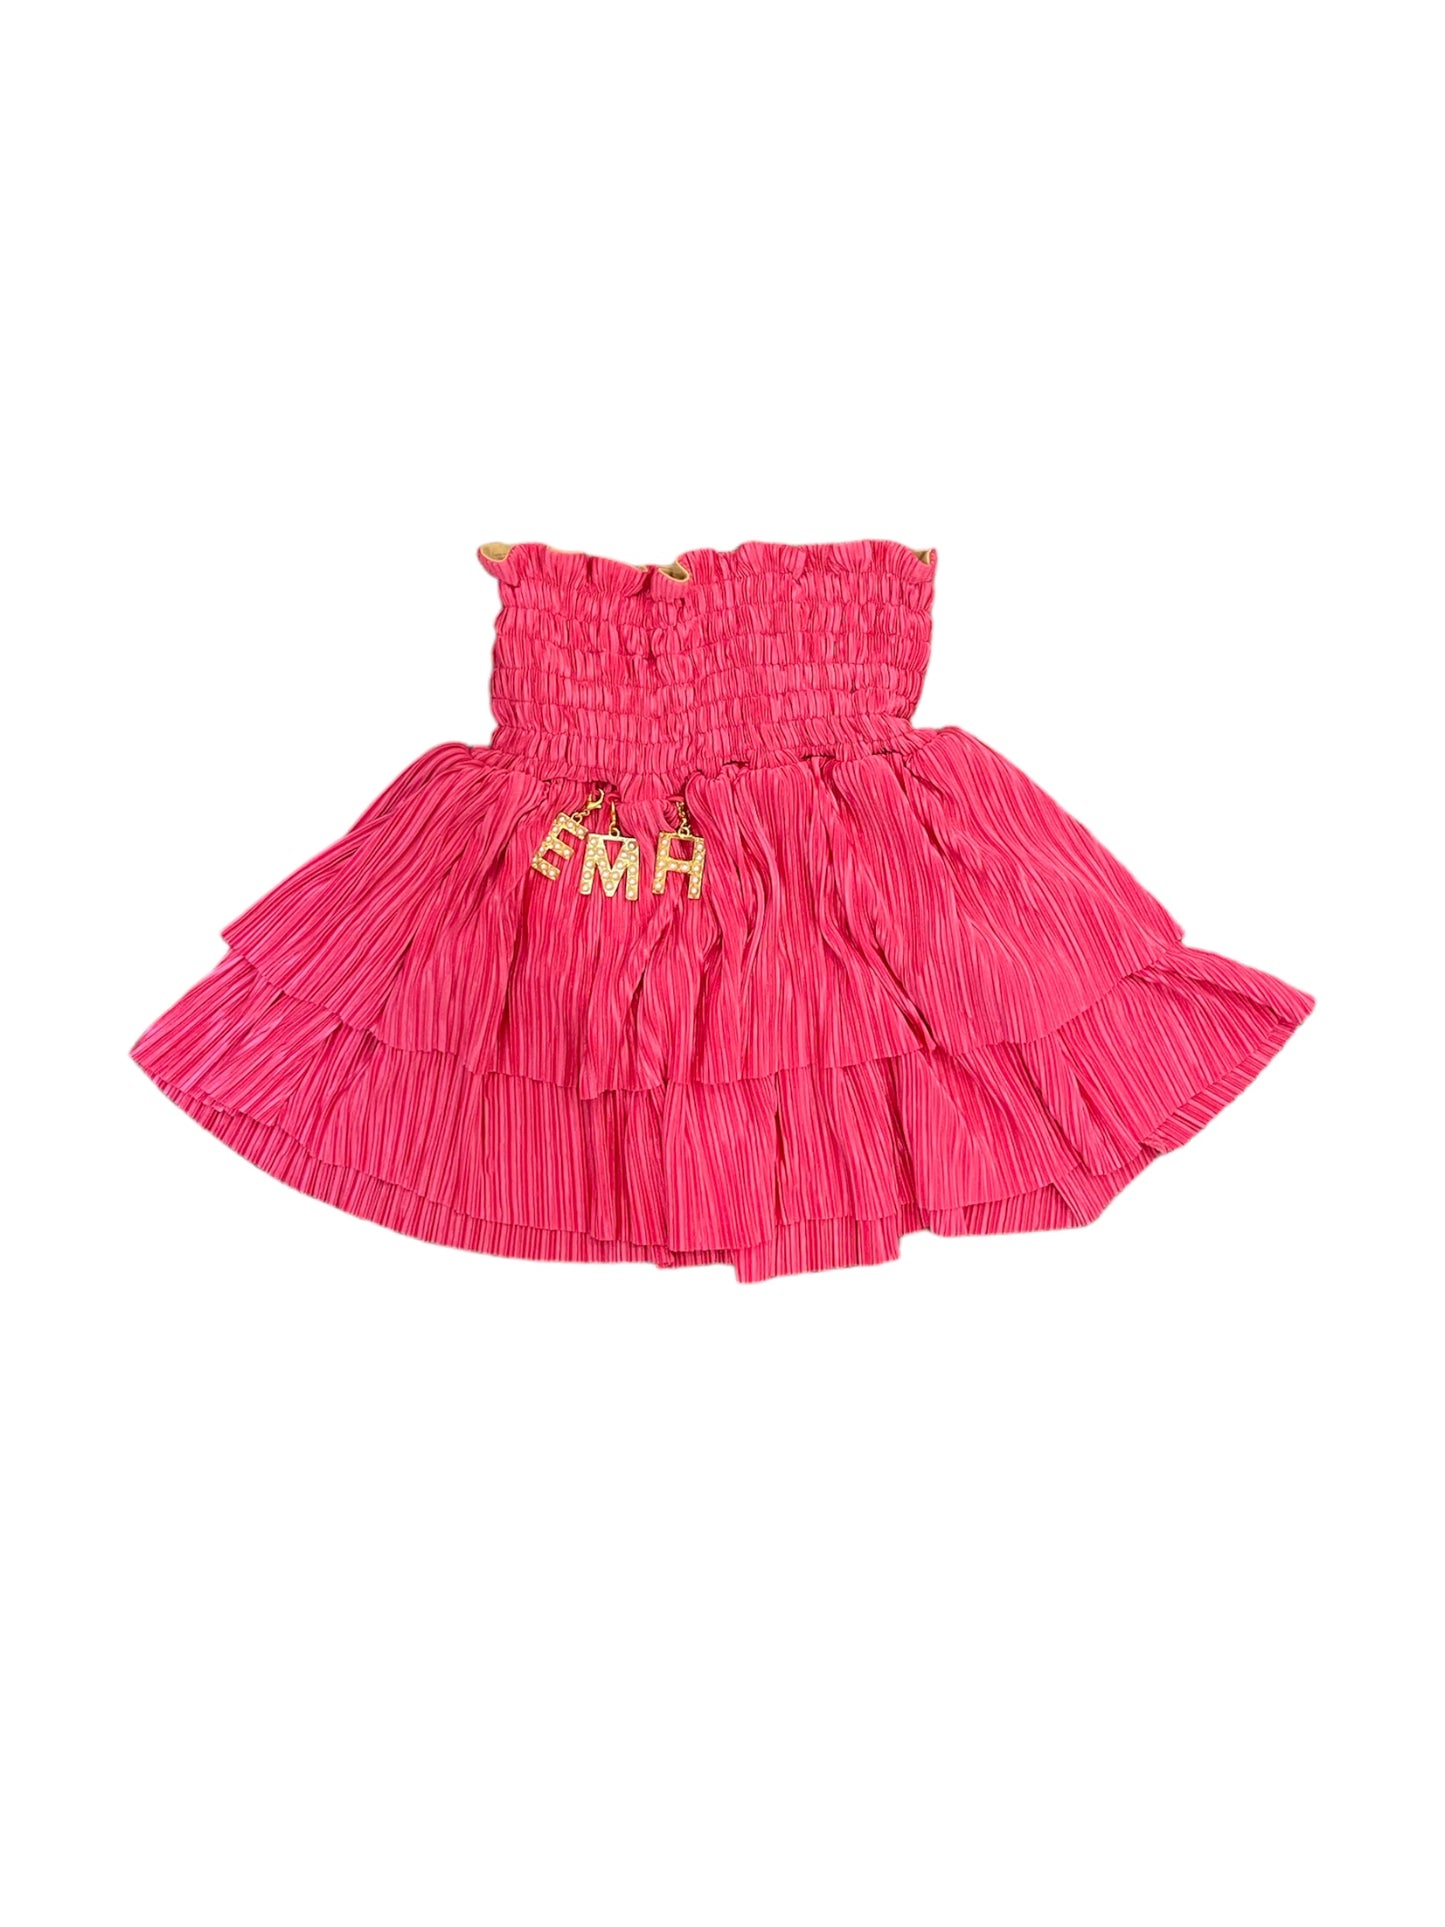 G2 Hot Pink Isla Skirt